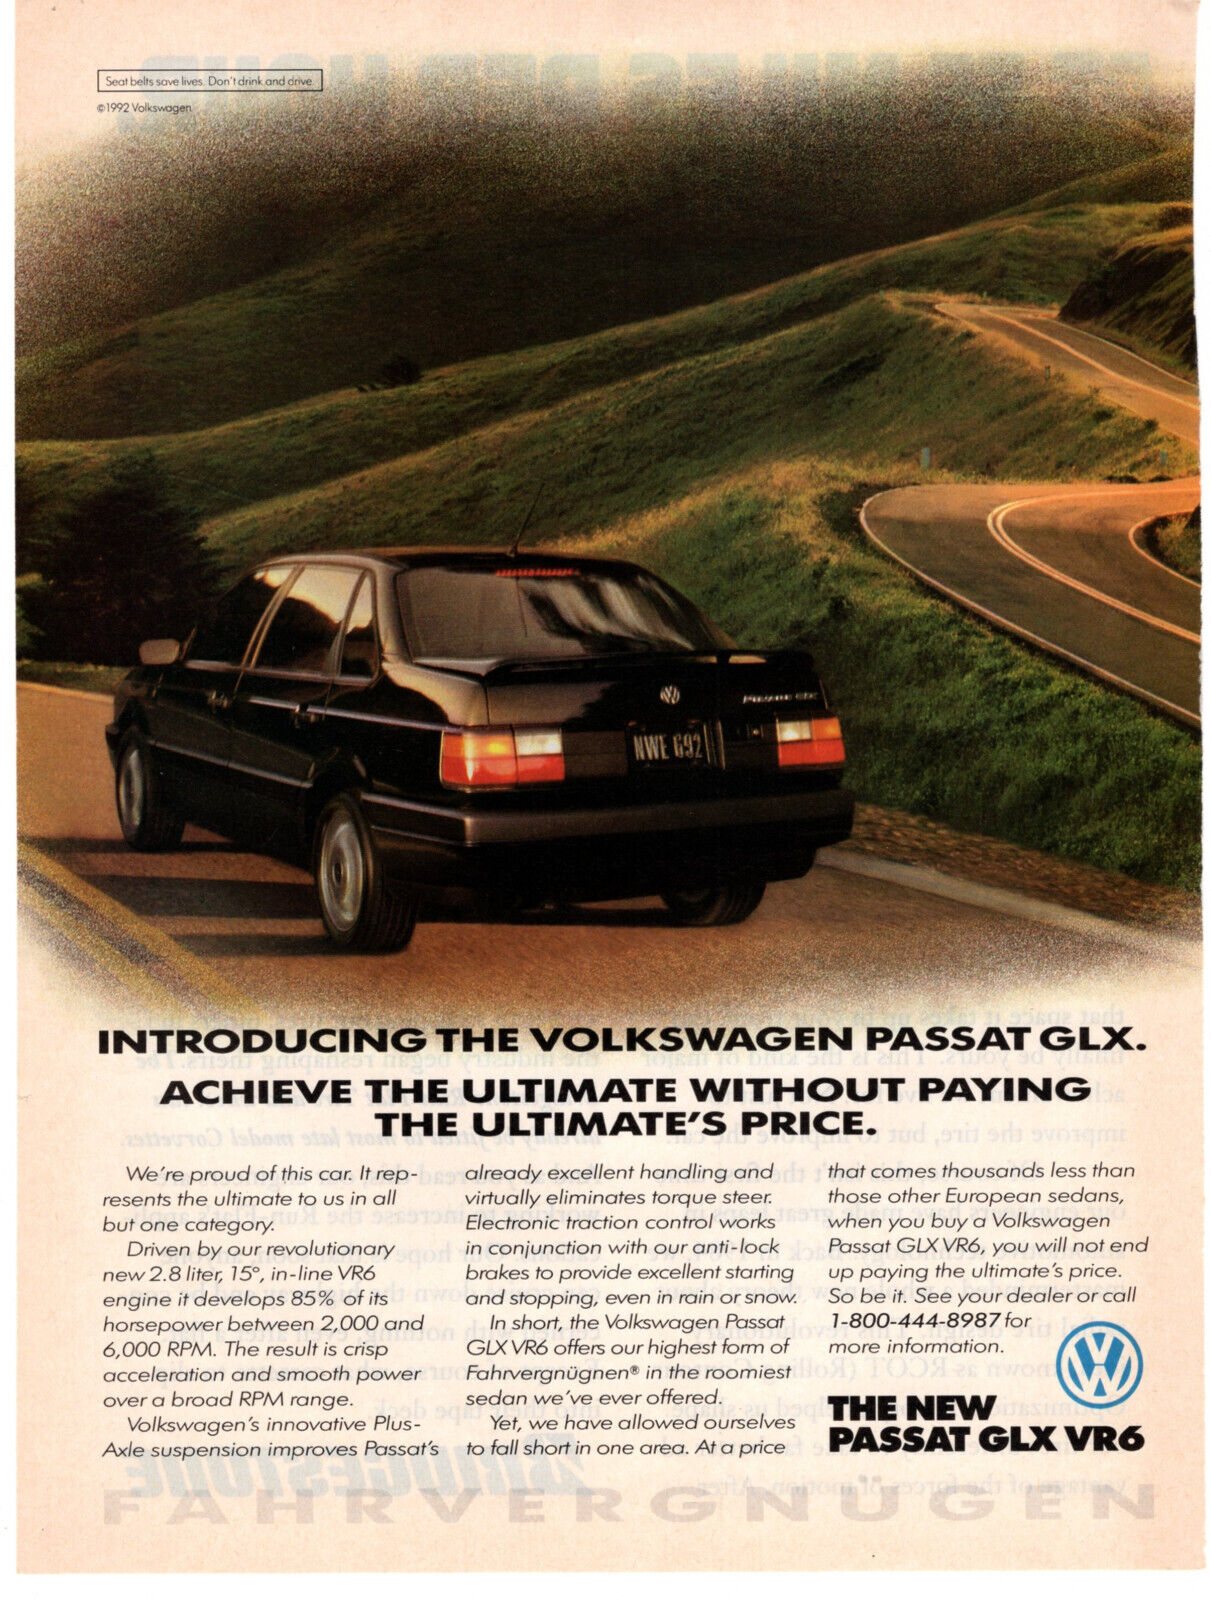 Volkswagen Passat GLX VR6 B3 VW Car 1992 Vintage Print Ad Original Man Cave